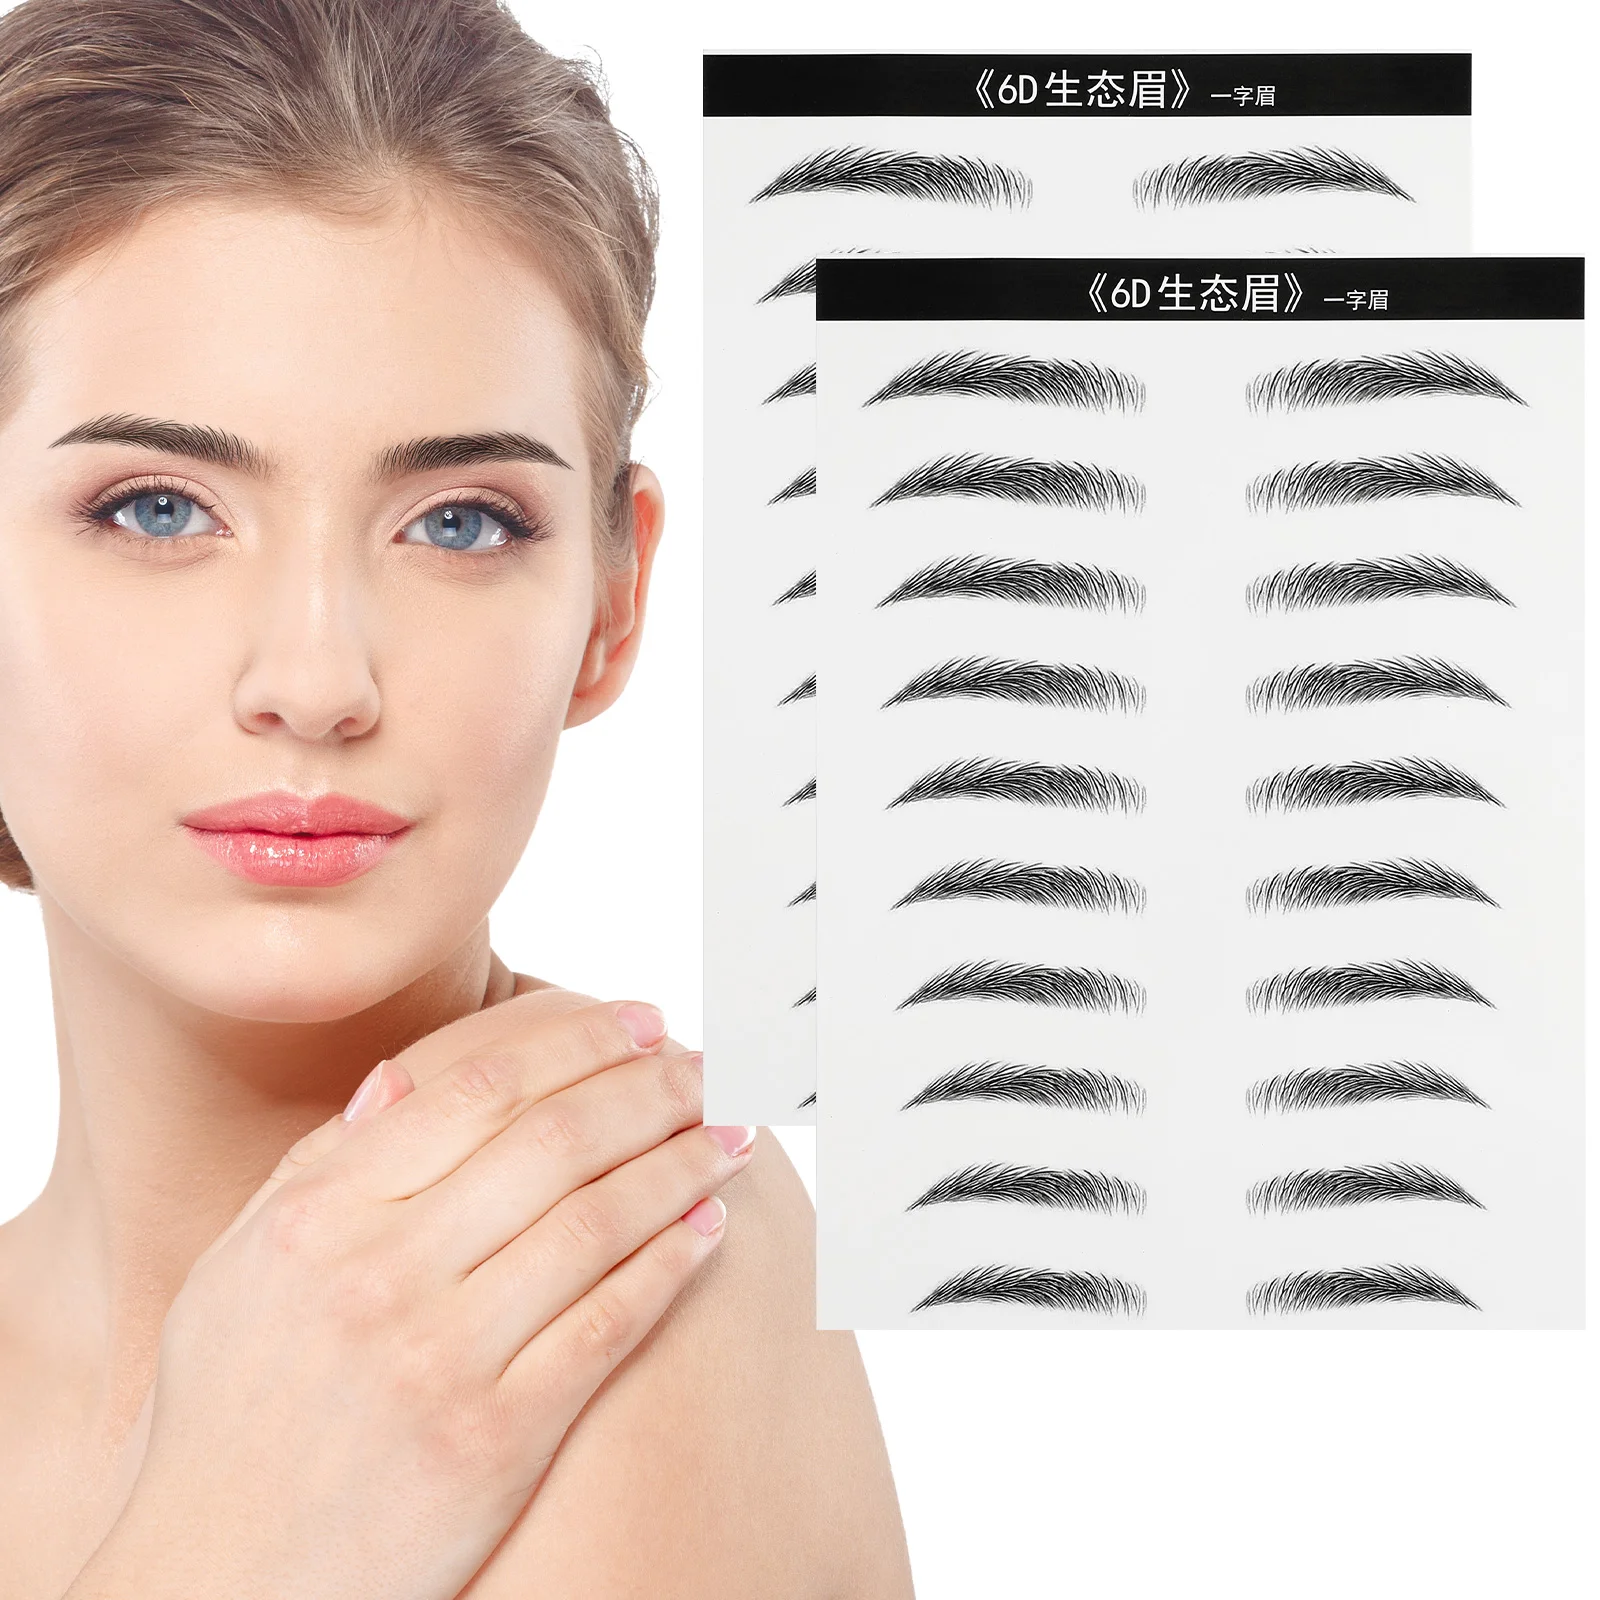 

20 Pairs Fake Eyebrow Tattoo Eye Makeup Supplies Trimming Eyebrow Transfers Stickers Grooming Shaping Eyebrow